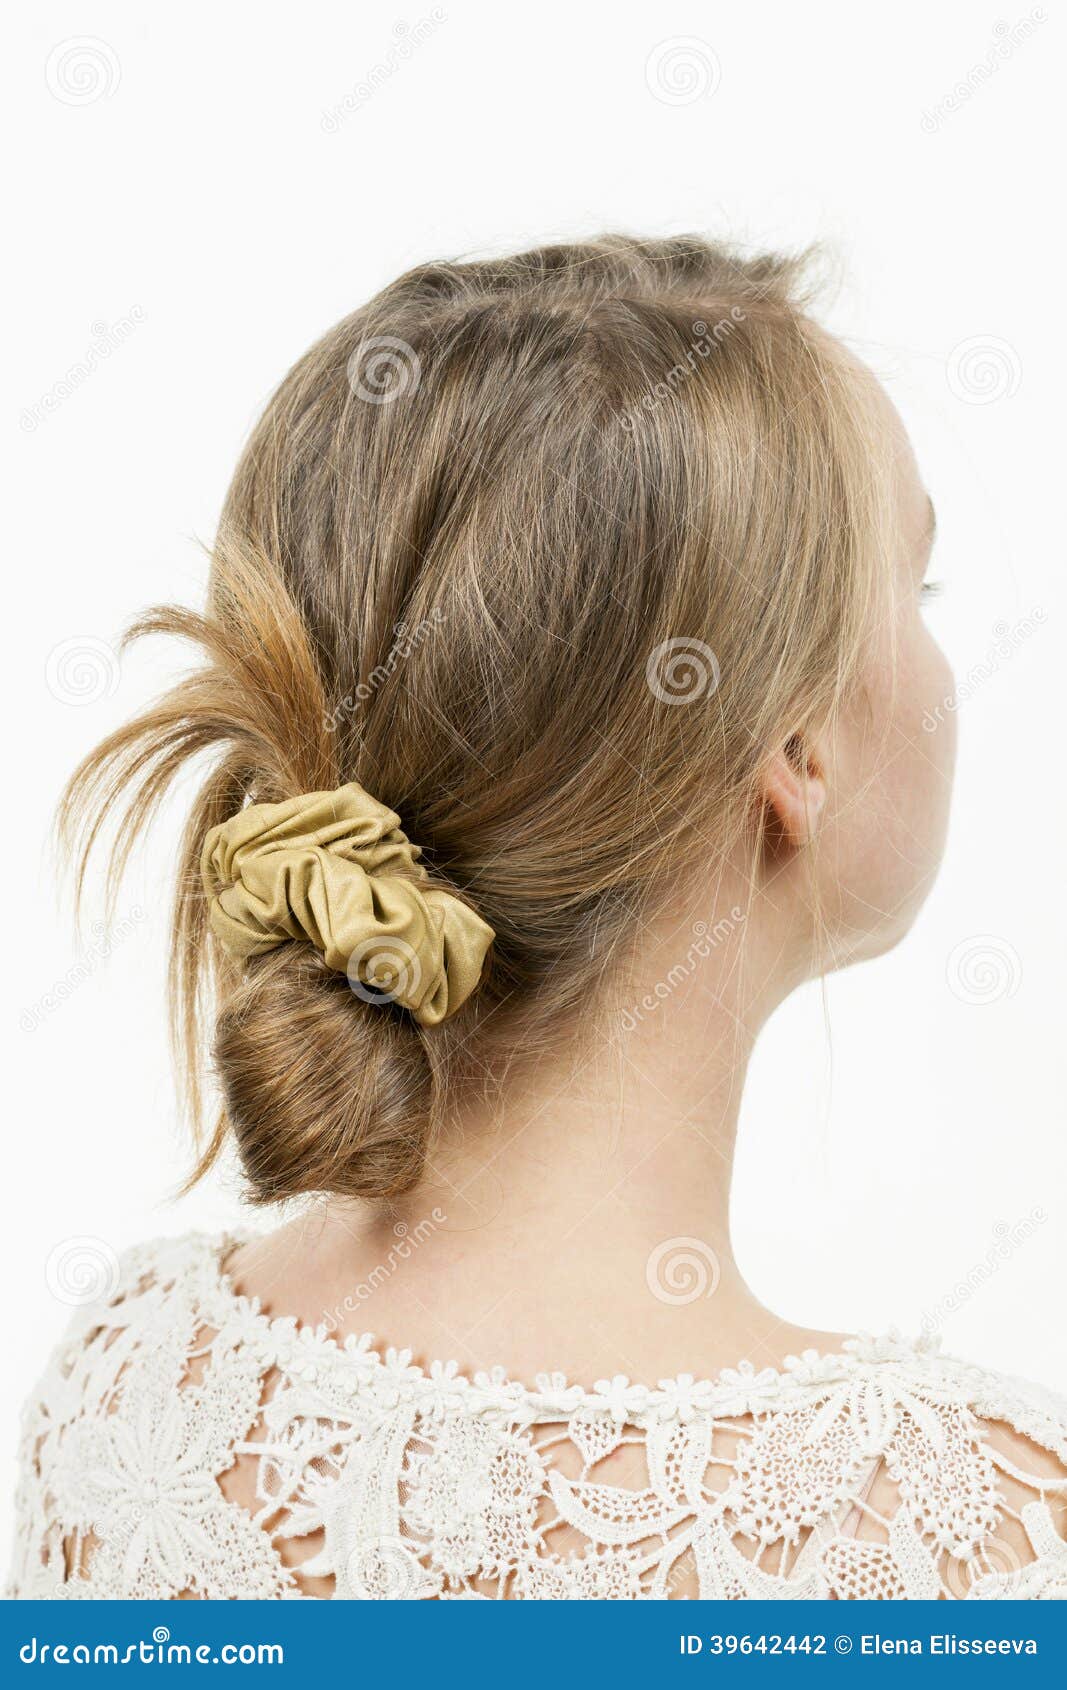 young woman casual messy bun hairdo studio shot chignon hairstyle 39642442